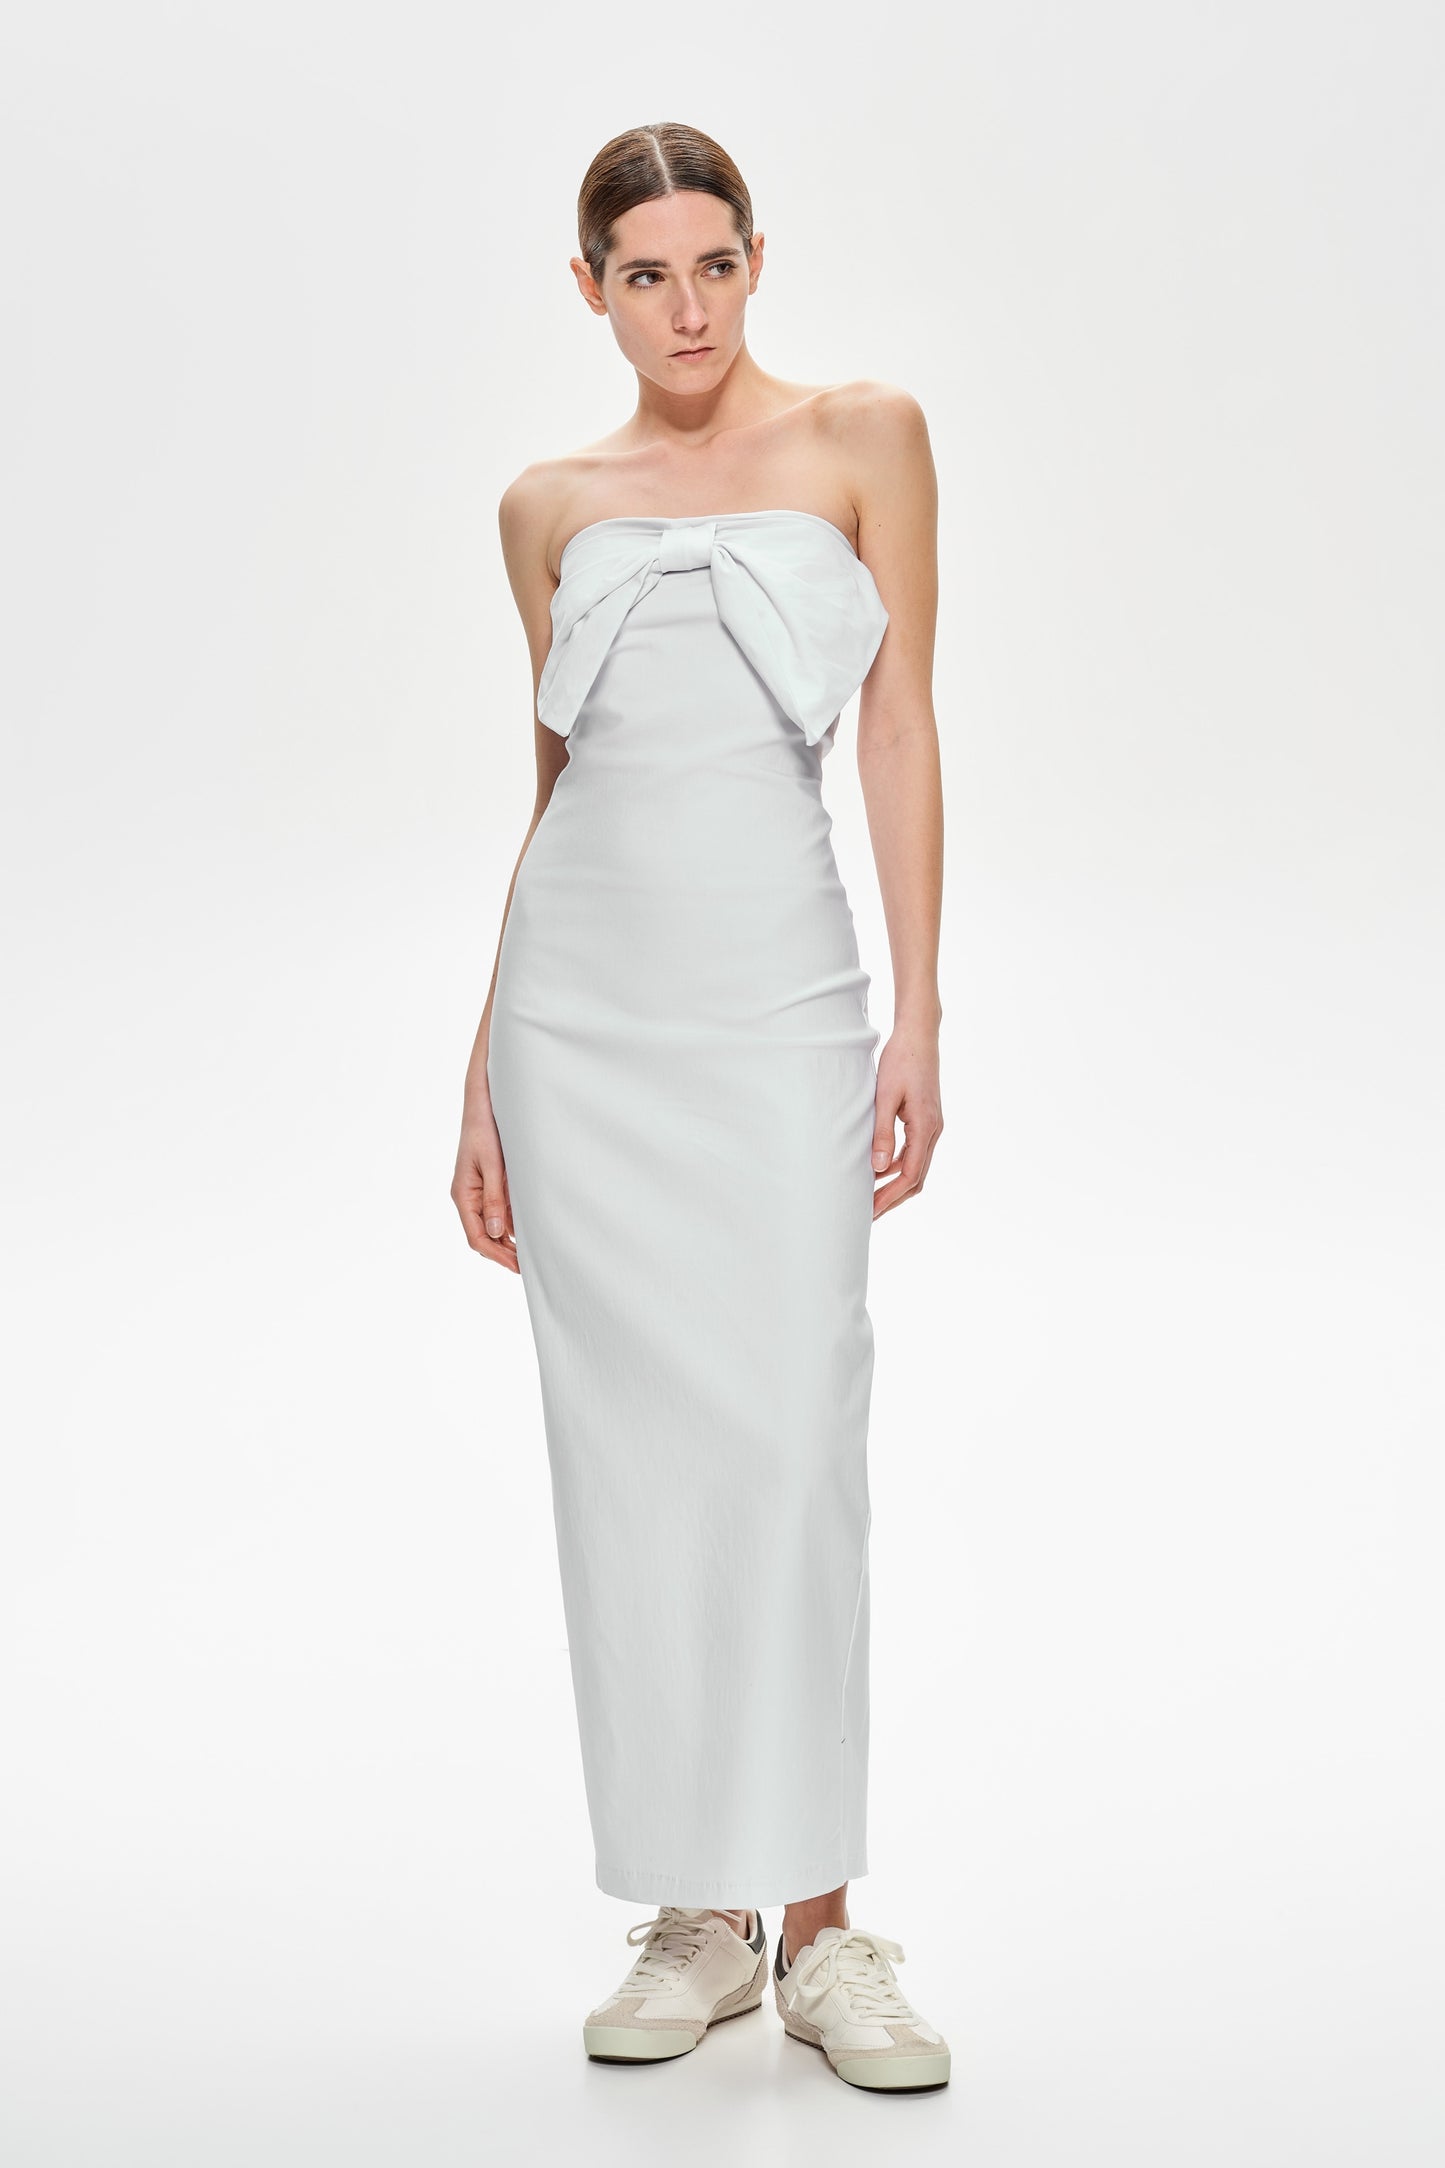 Bow strapless white dress